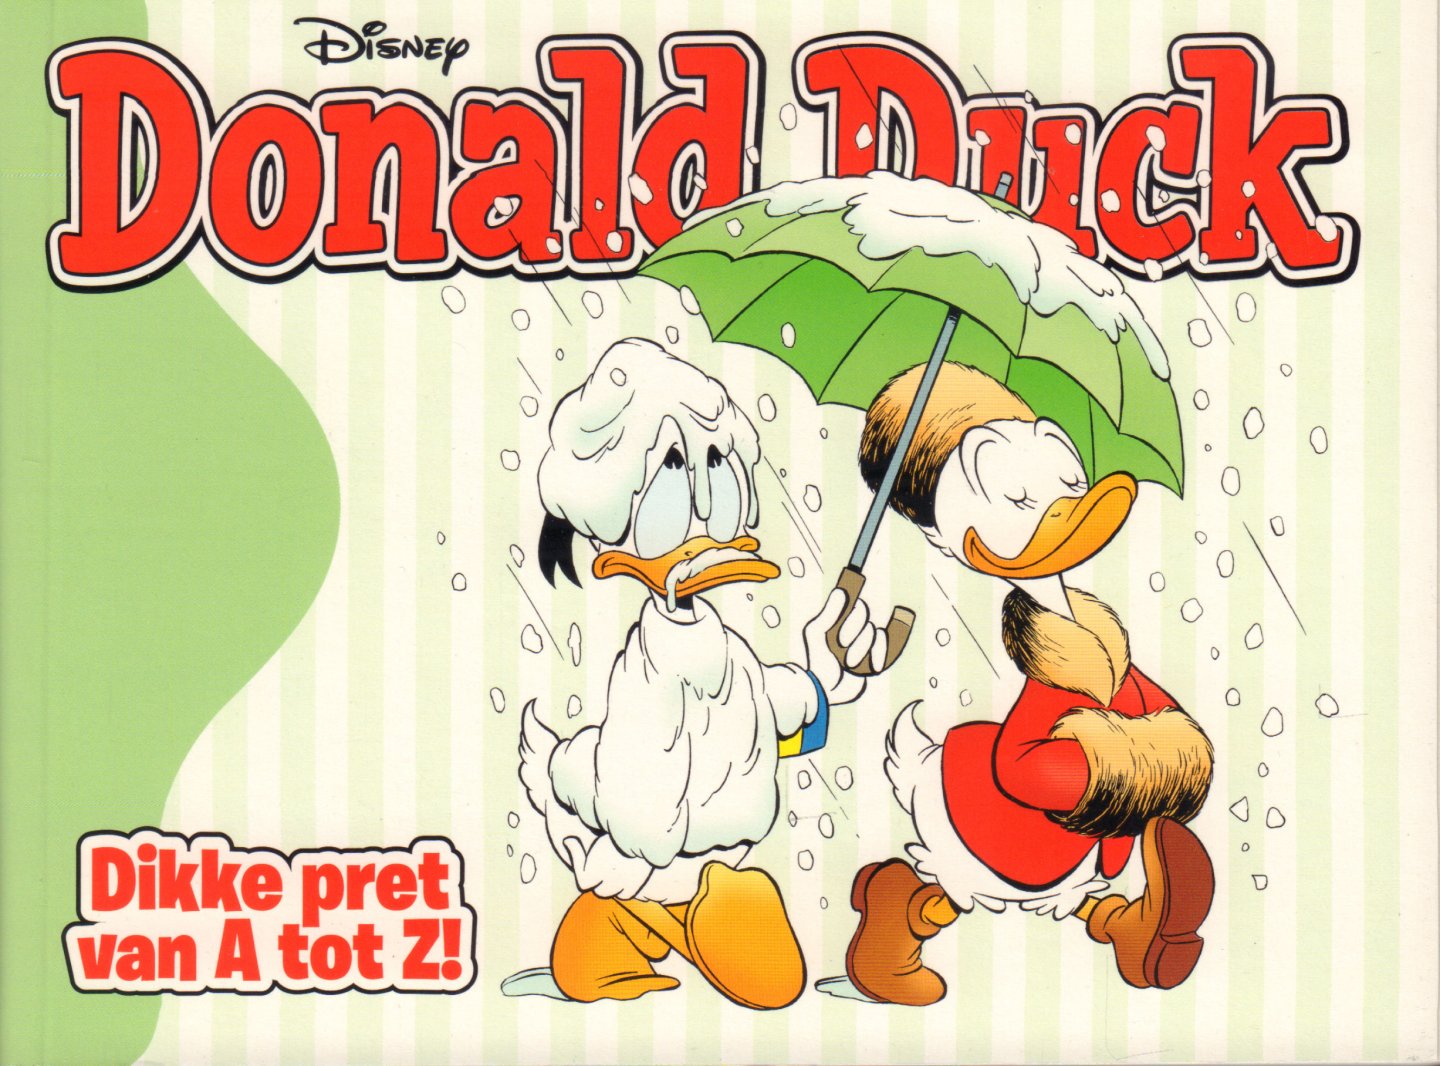 Walt Disney - Donald Duck - Dikke Pret van A tot Z !, 95 pag. softcover, oblong formaat, gave staat